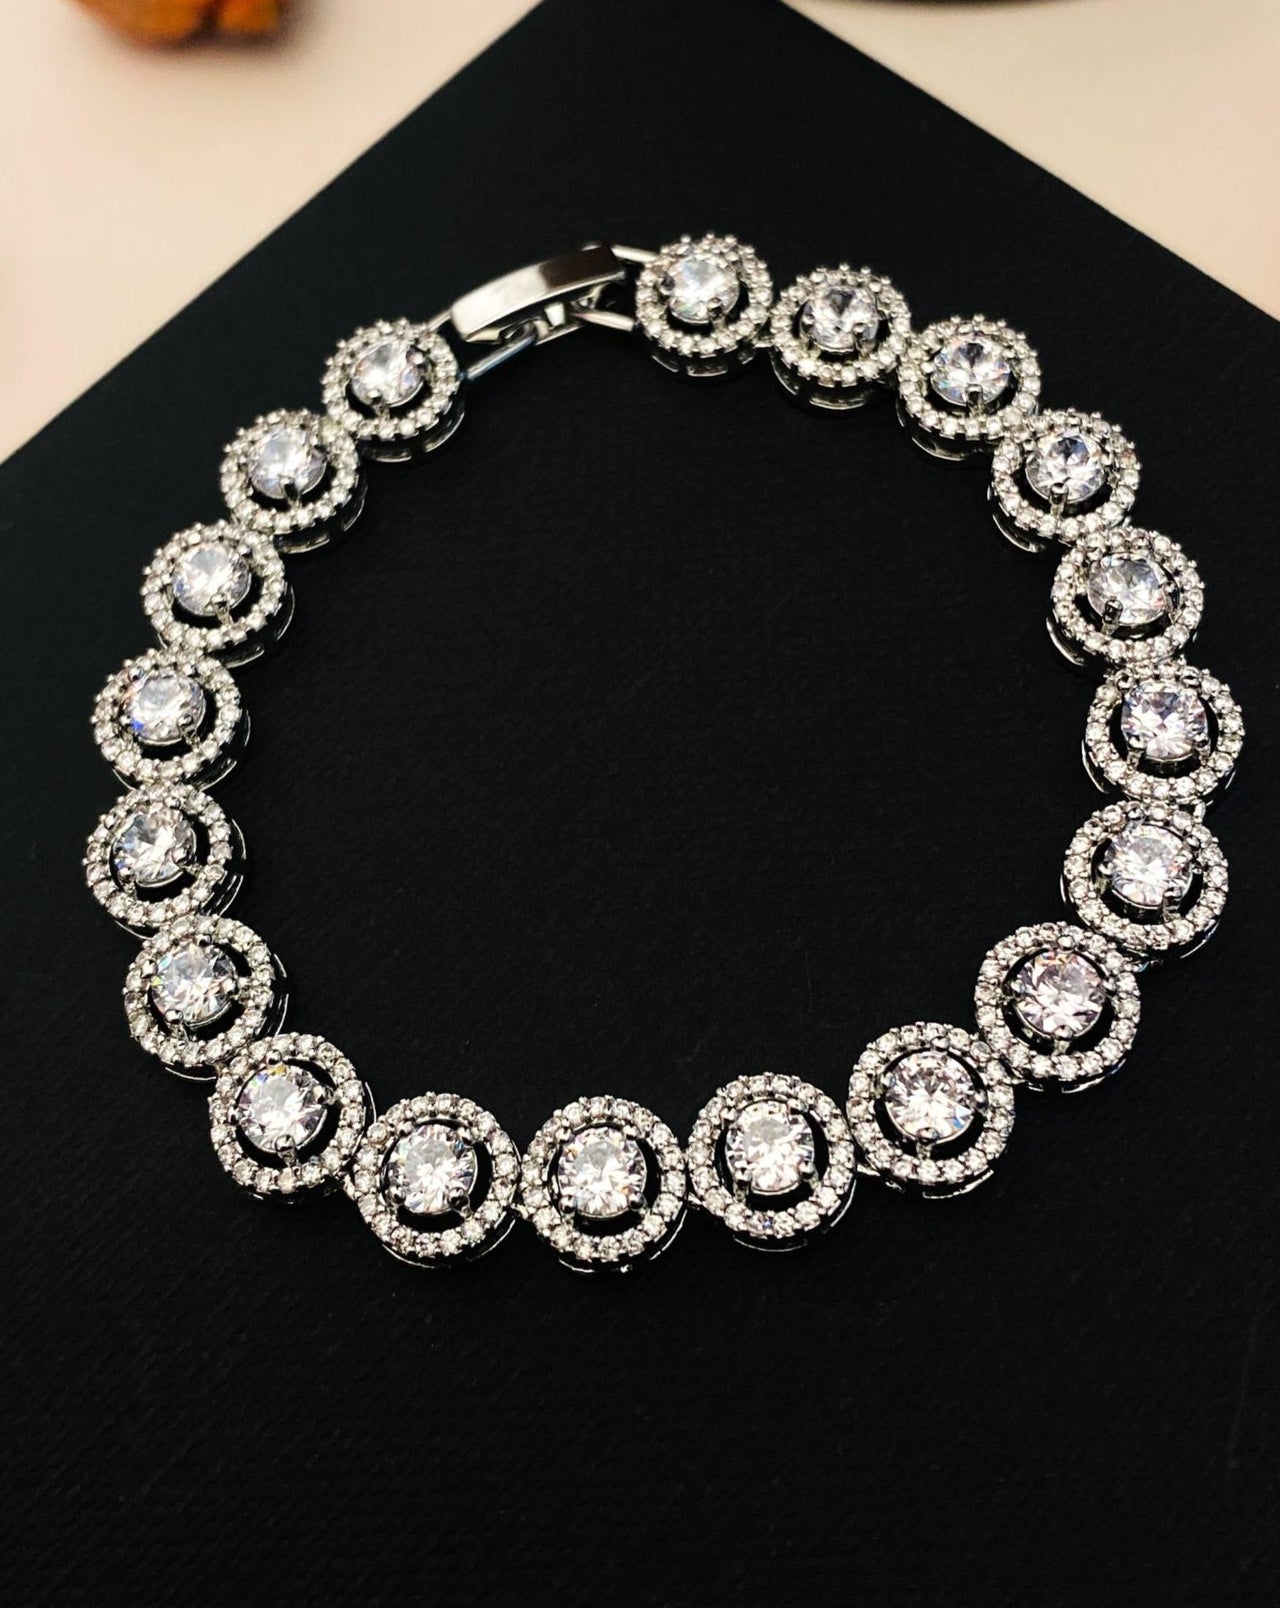 Elegant High Quality Silver Cz Bracelet - Abdesignsjewellery